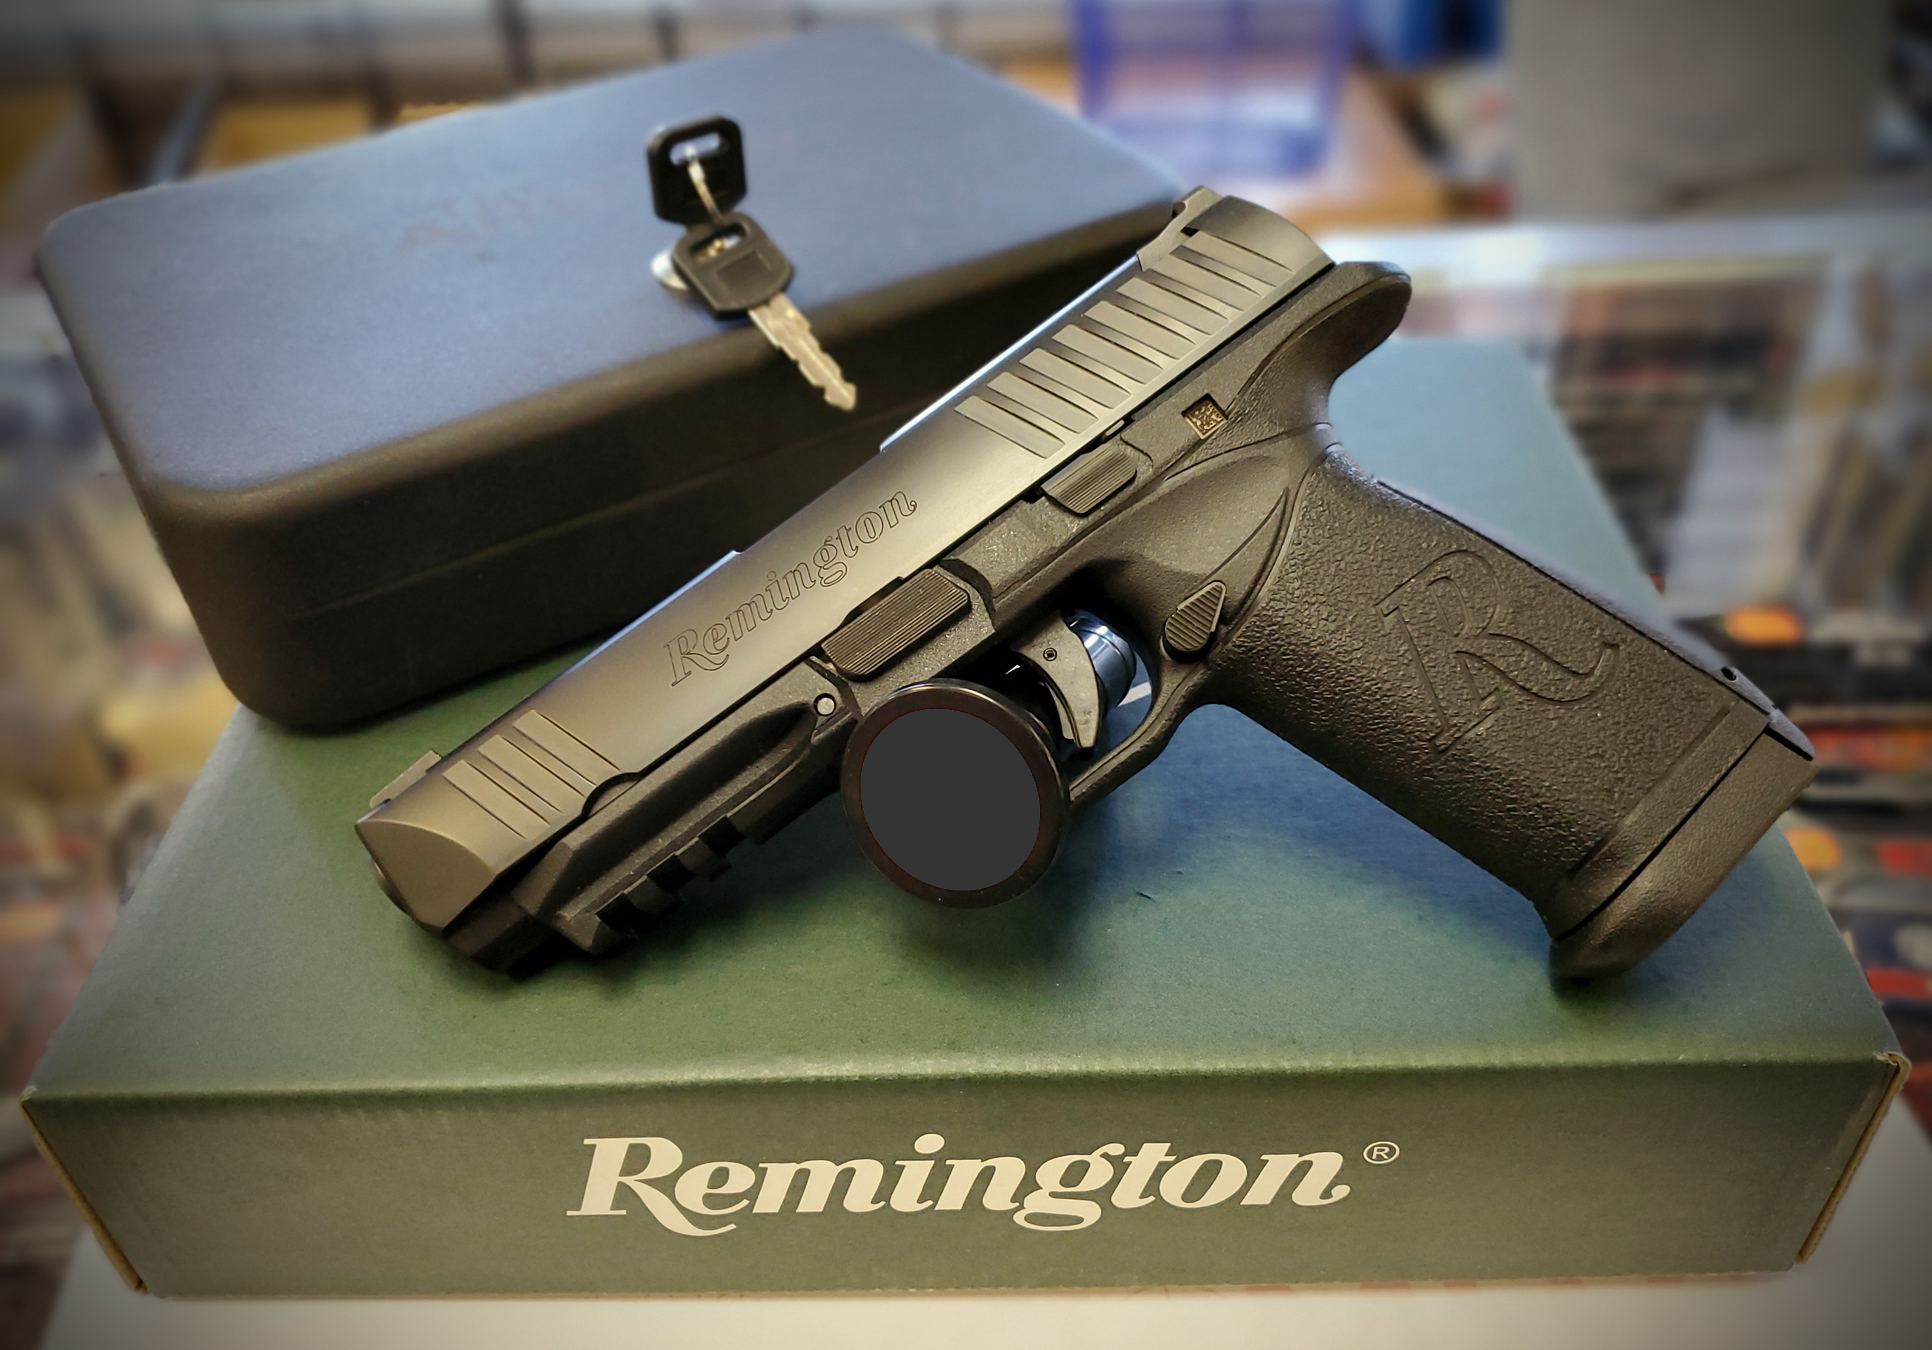 Remington RP9 with free pistol. 18 round magazines